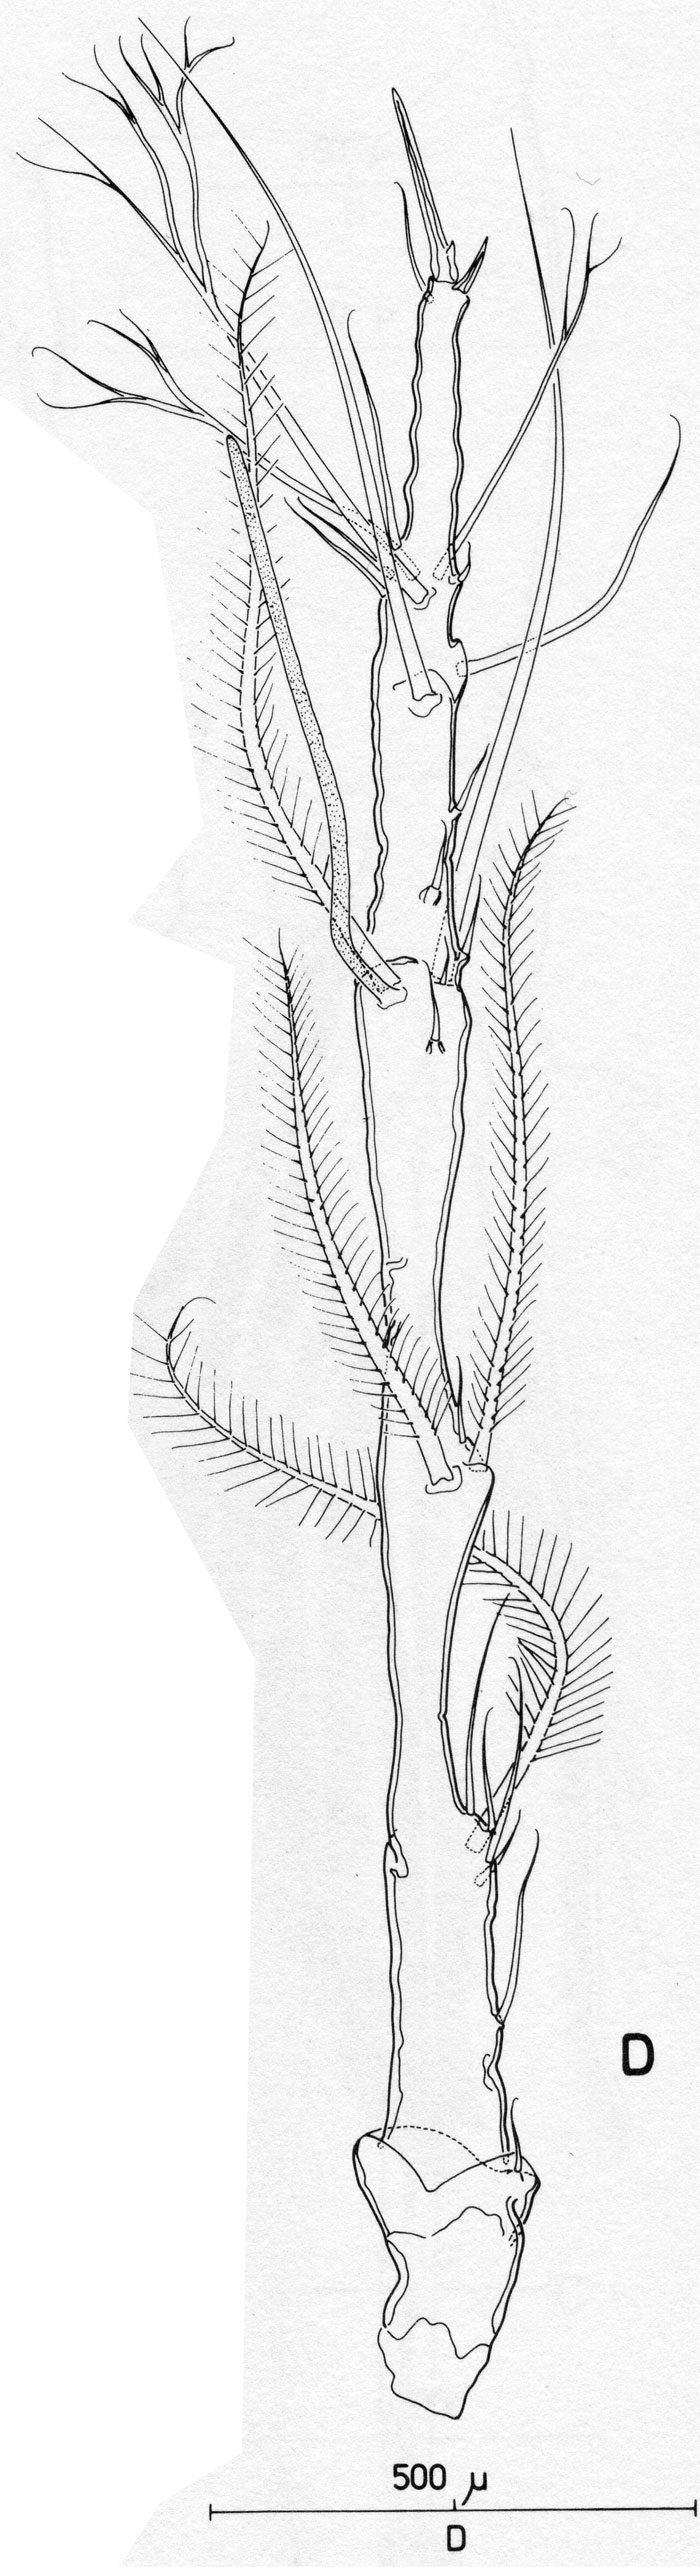 Species Monstrilla longiremis - Plate 2 of morphological figures